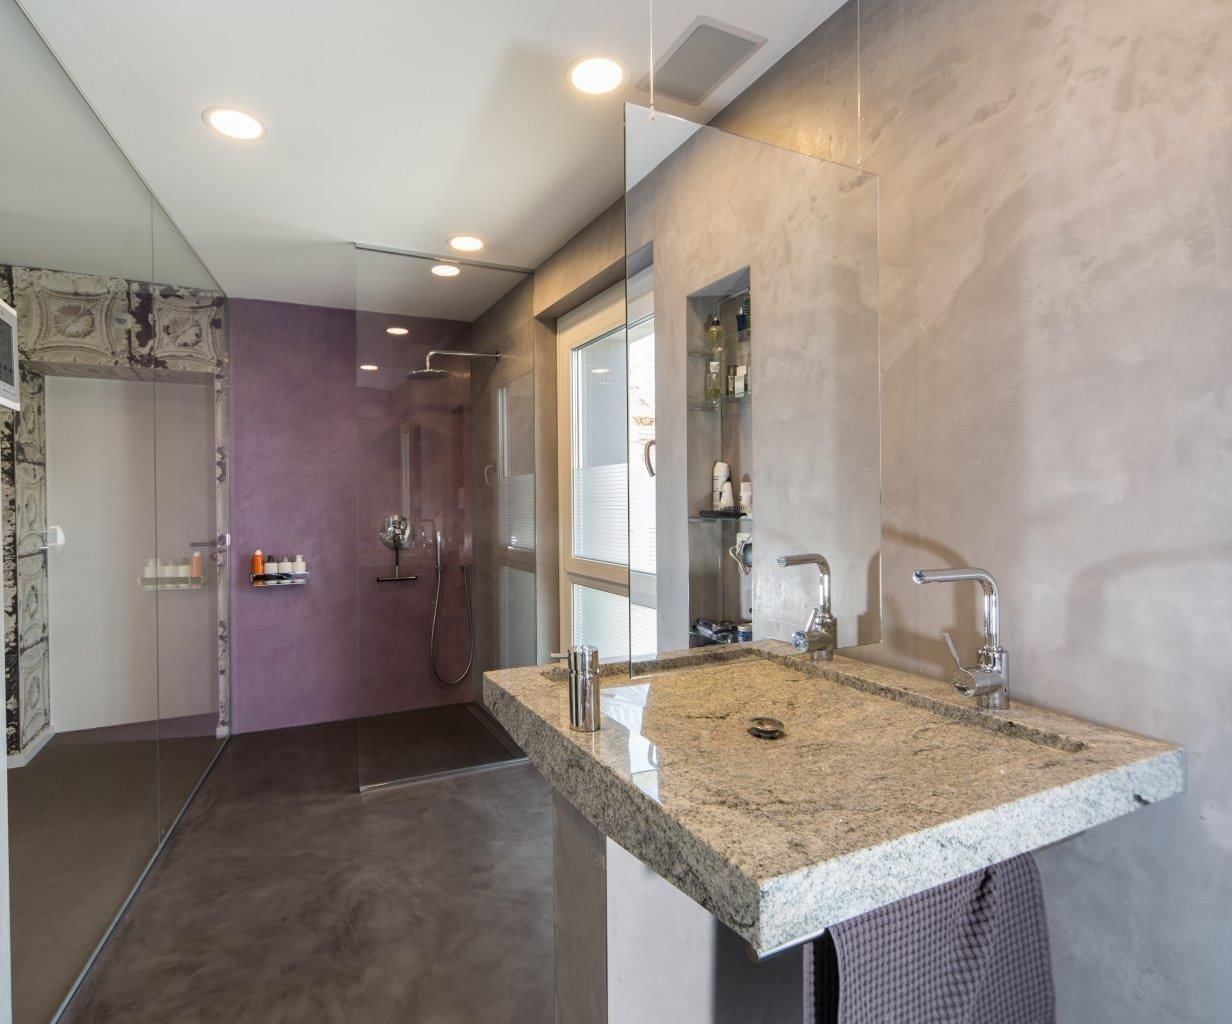 bath-room-stucco-siam-wall-coating-inspiration